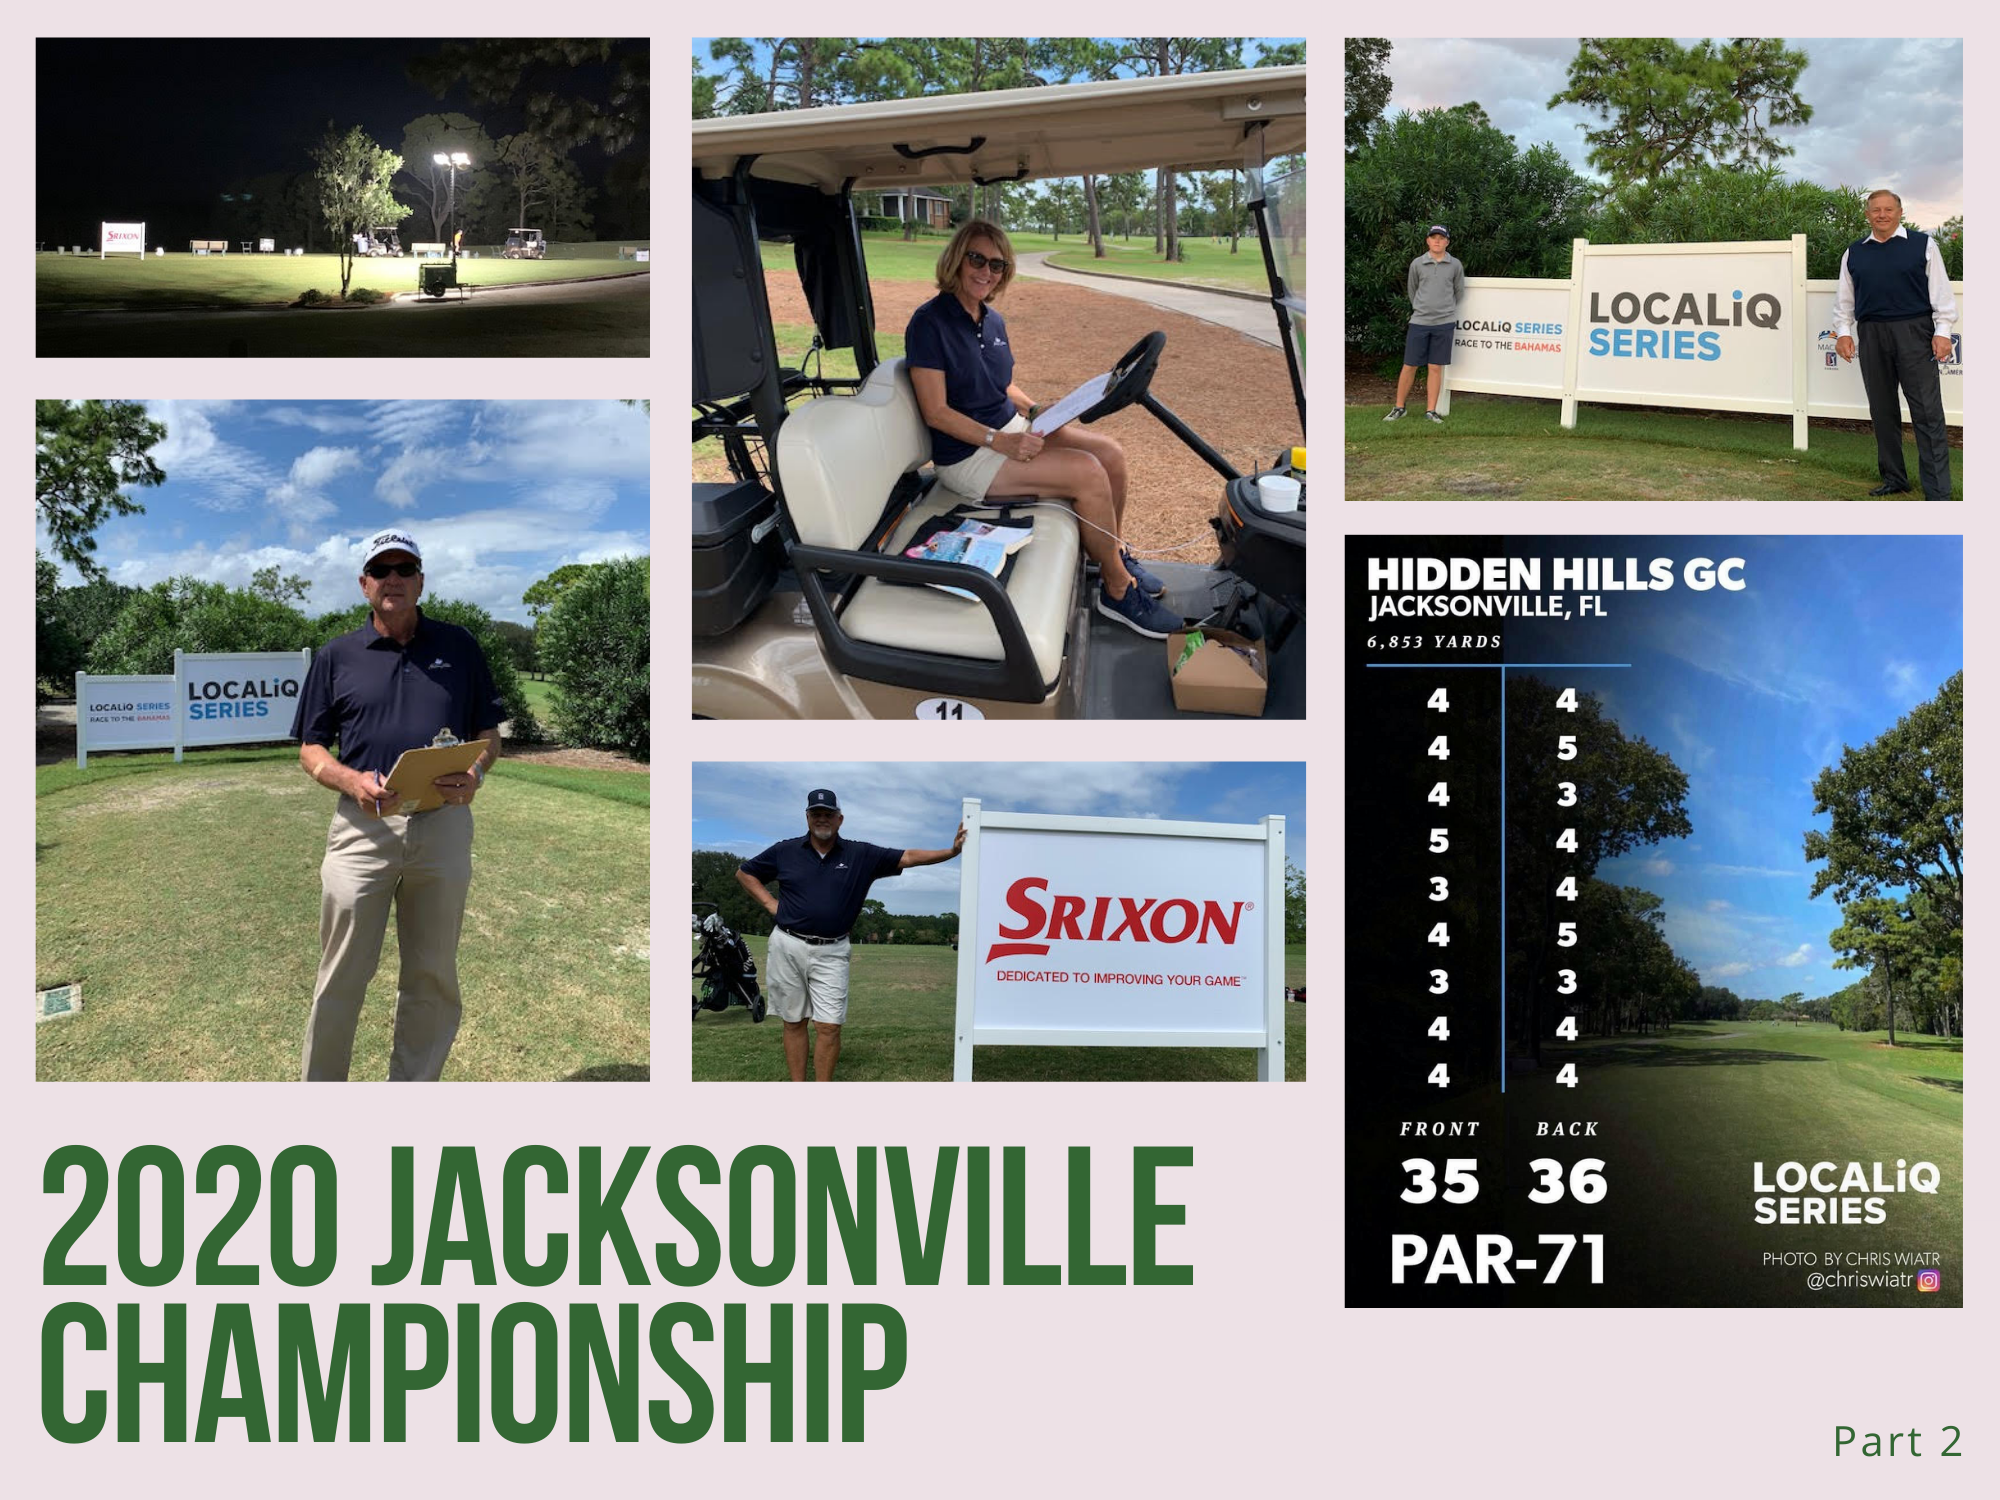 The Jacksonville Championship Hidden Hills Golf Club